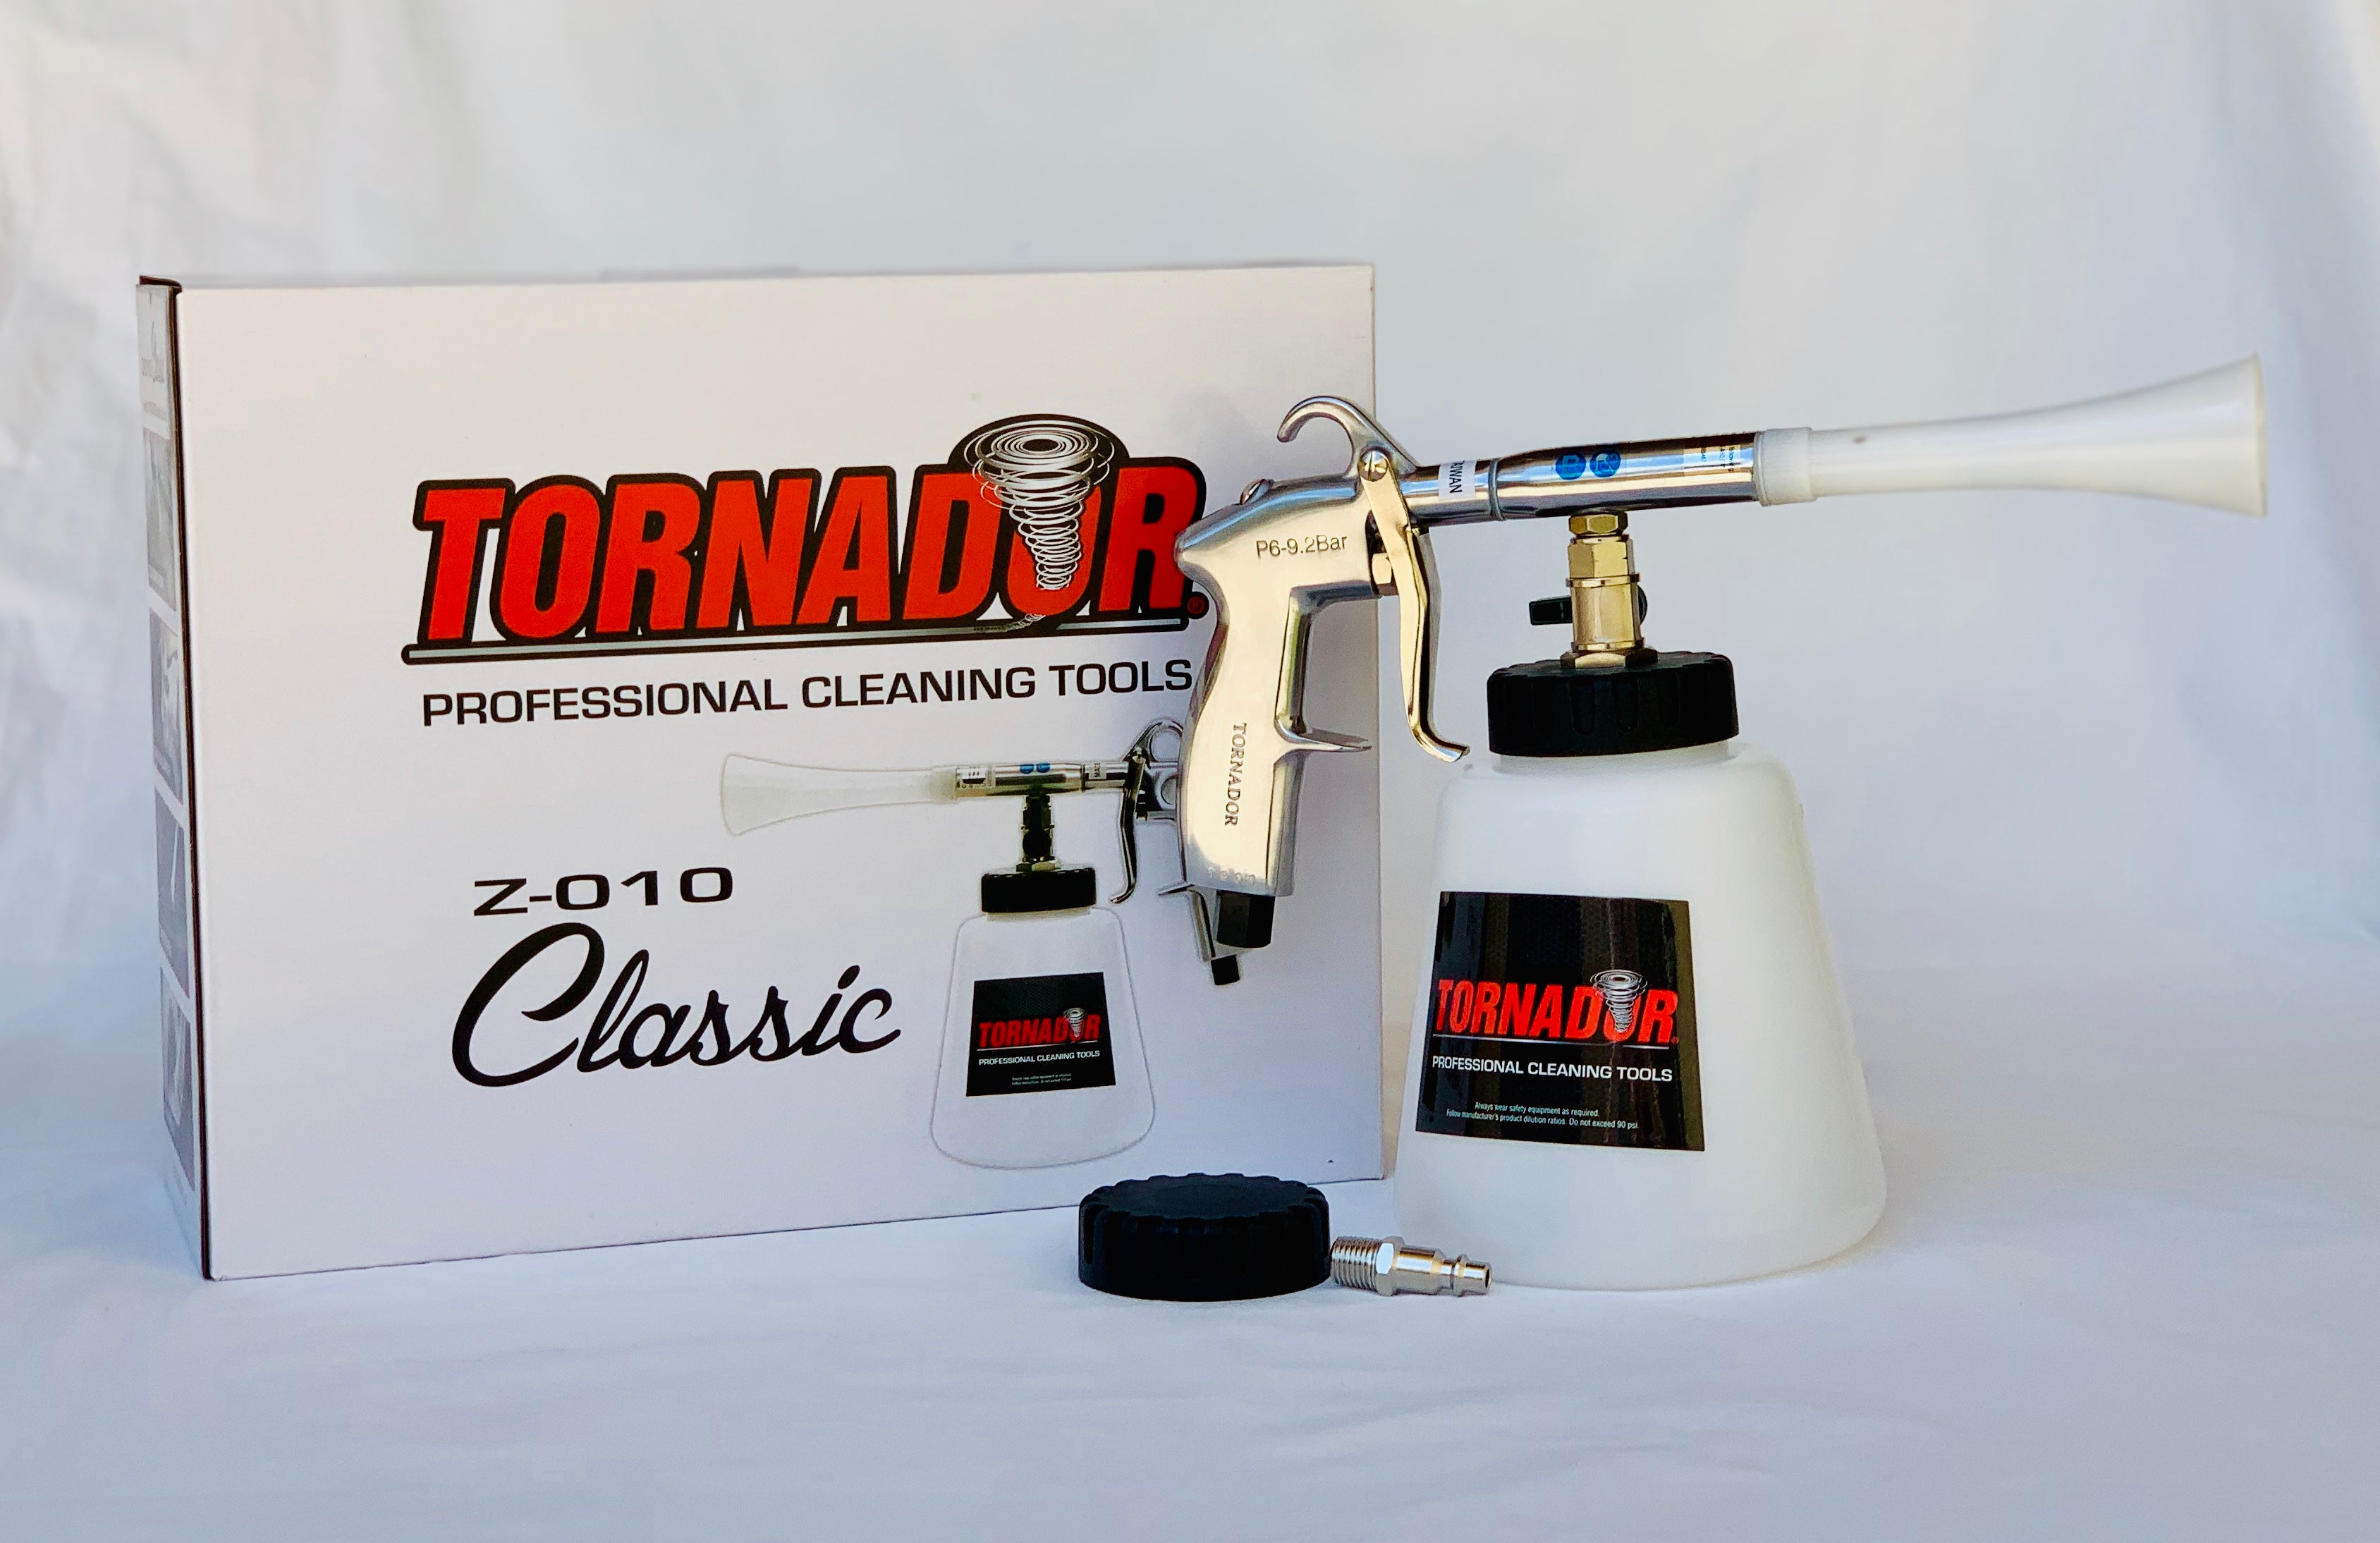 Tornador Classic Z-010 - Details Exclusive Product